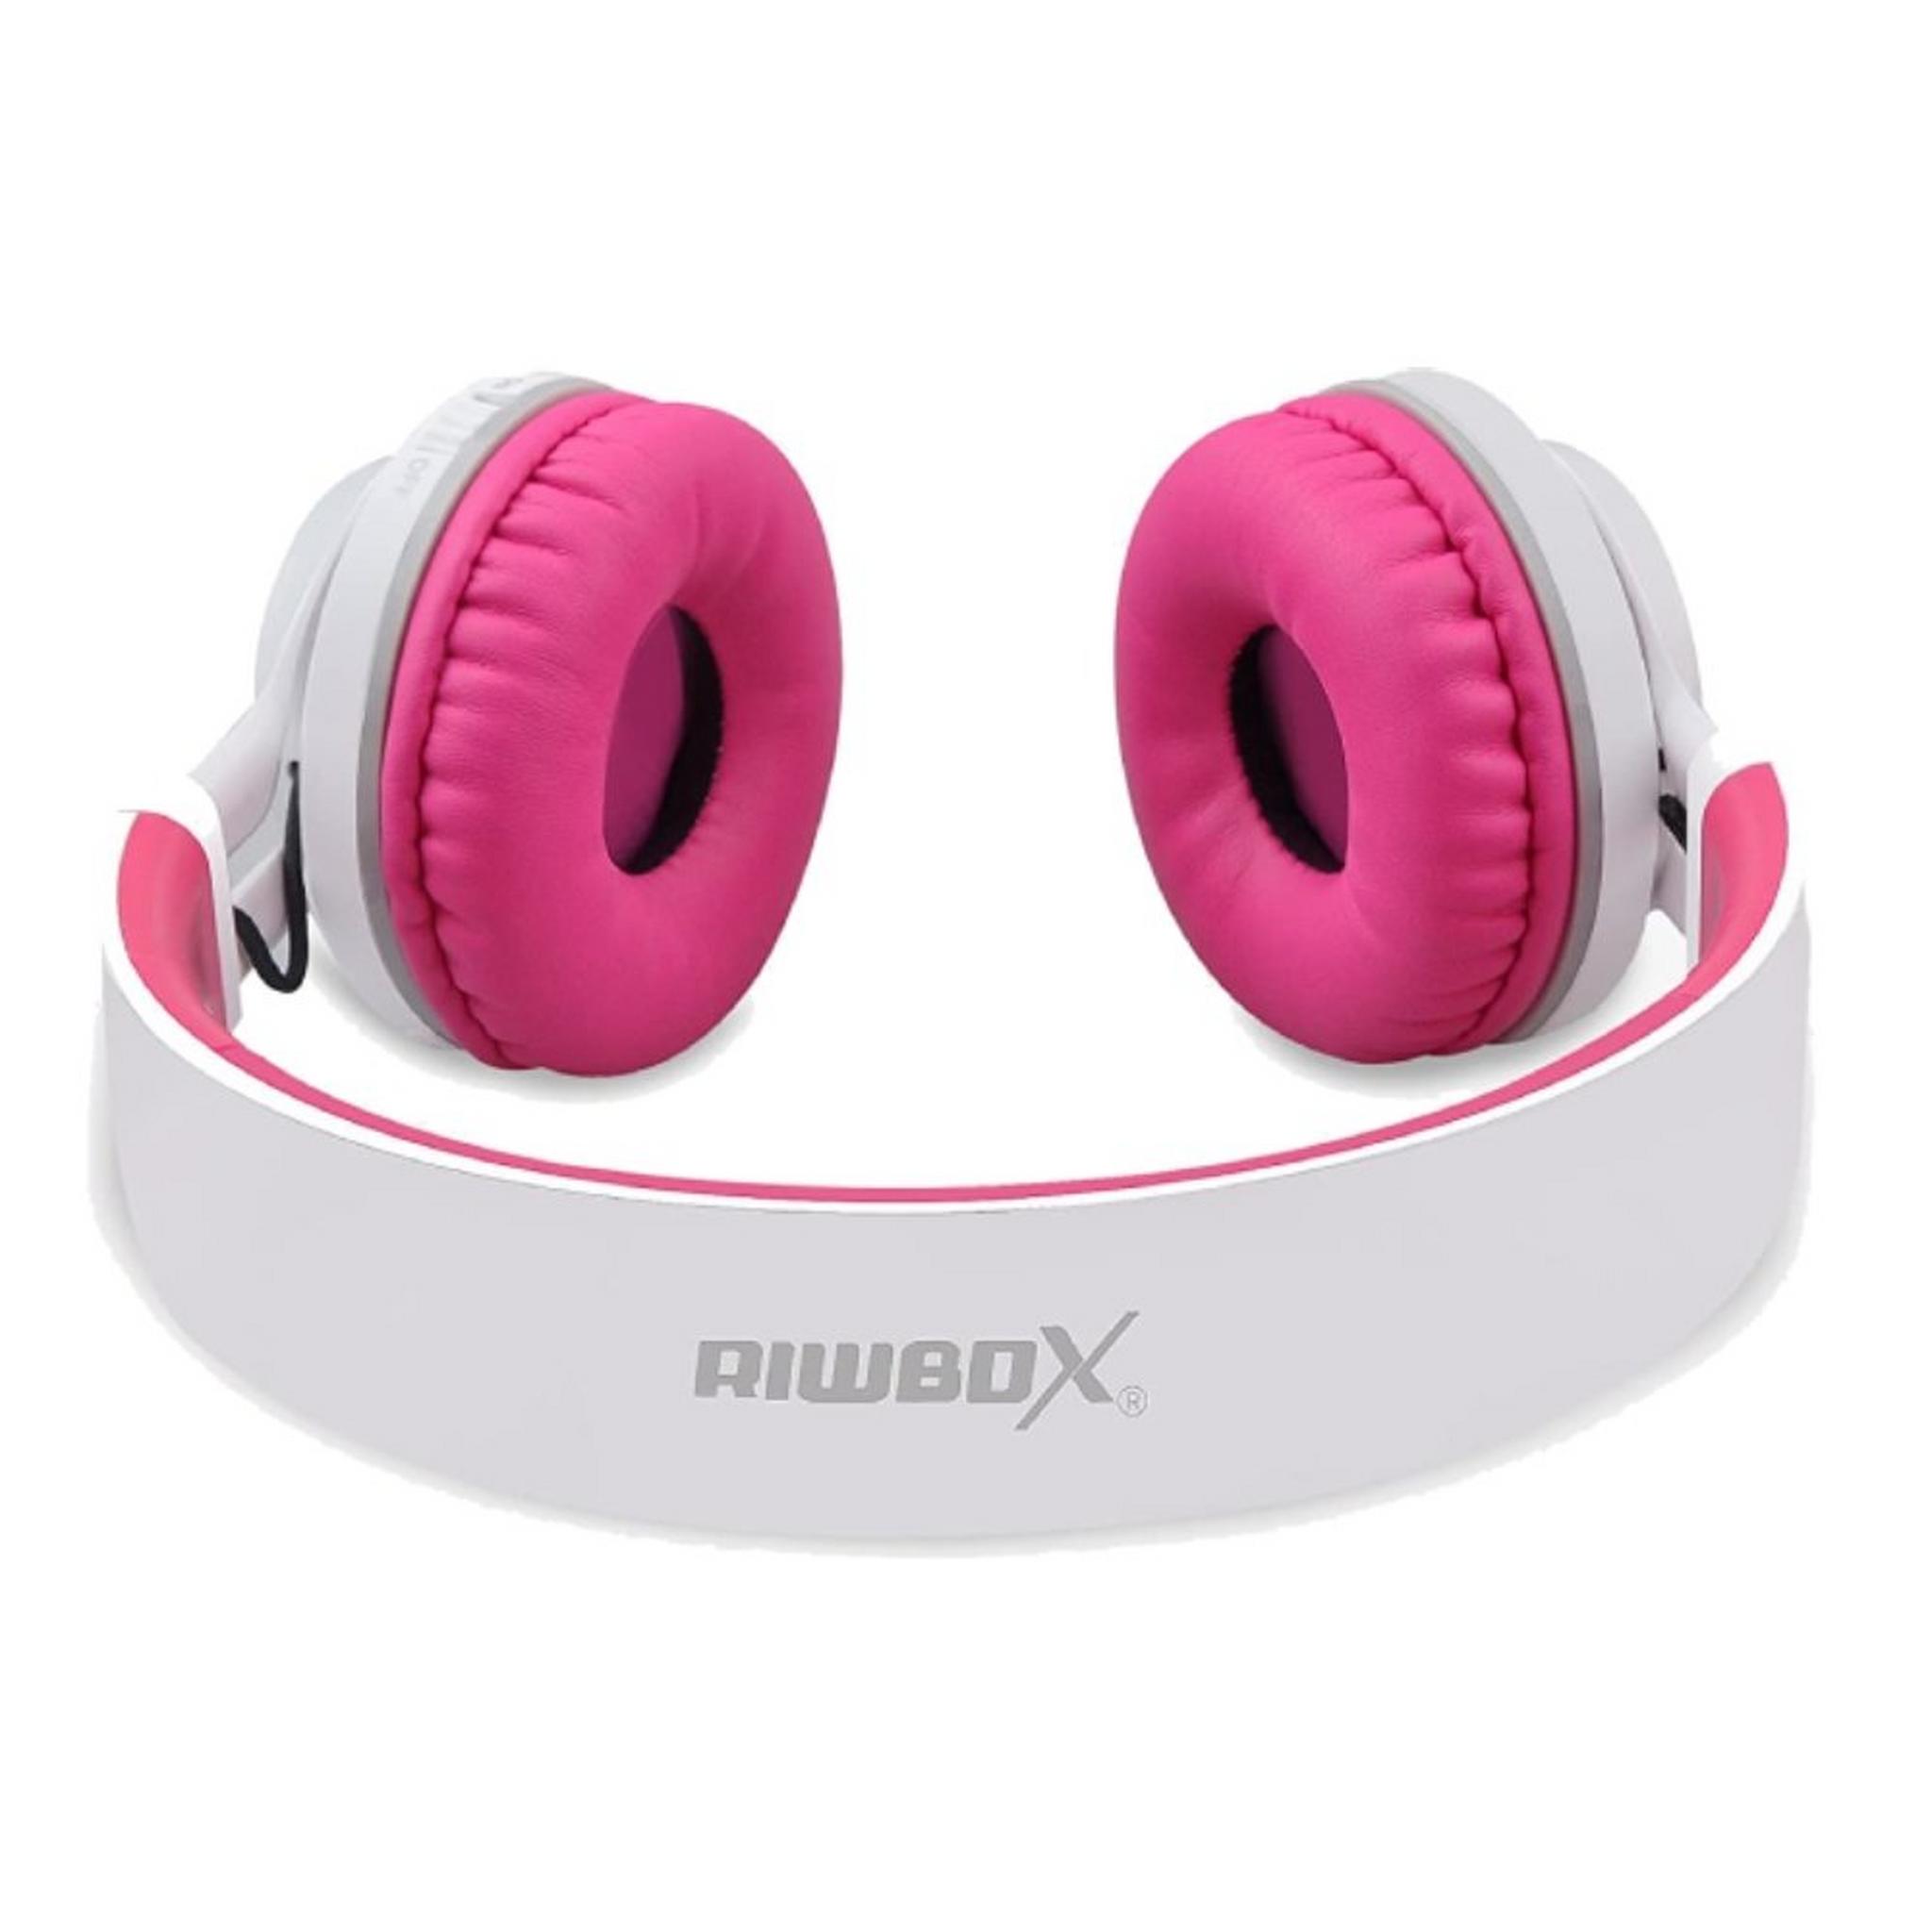 Riwbox Kids LED Wireless Headphones - Pink/White